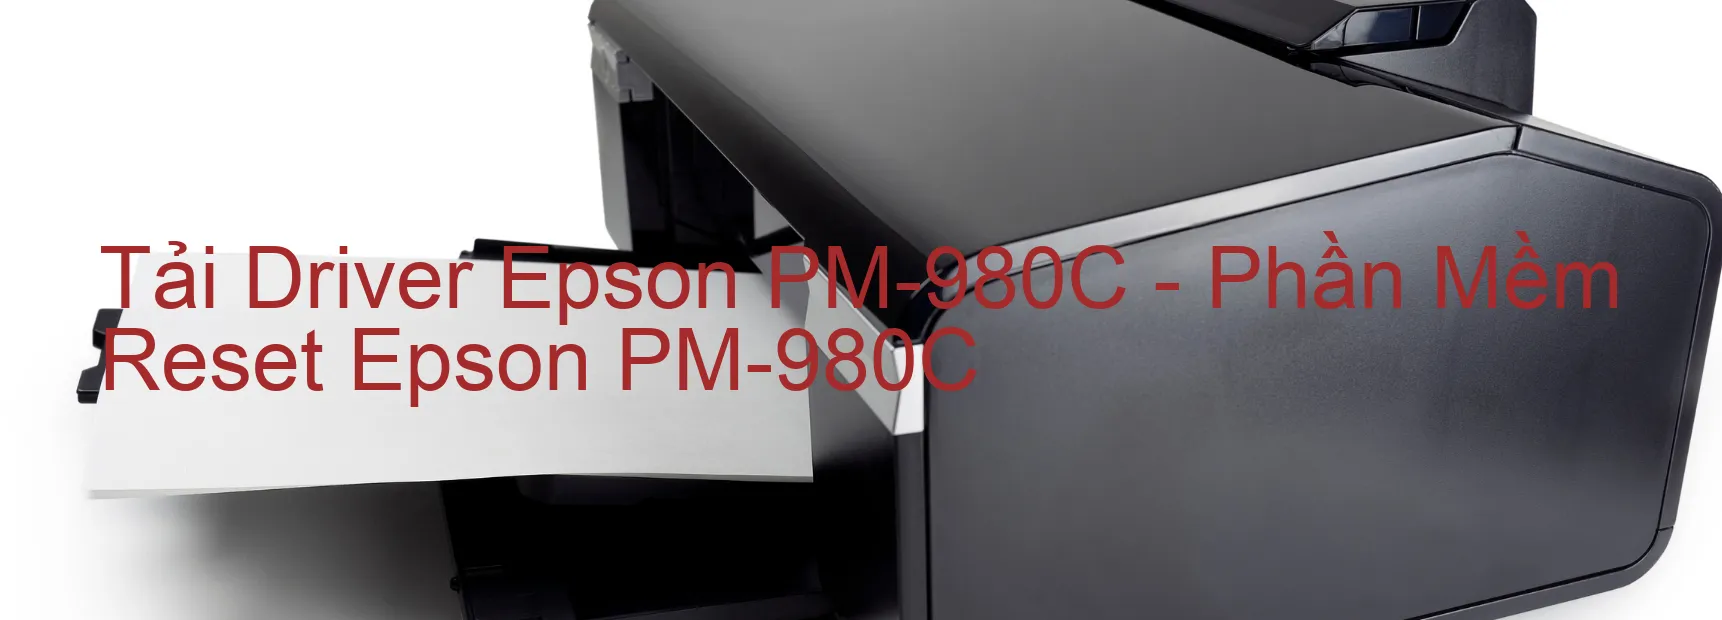 Driver Epson PM-980C, Phần Mềm Reset Epson PM-980C